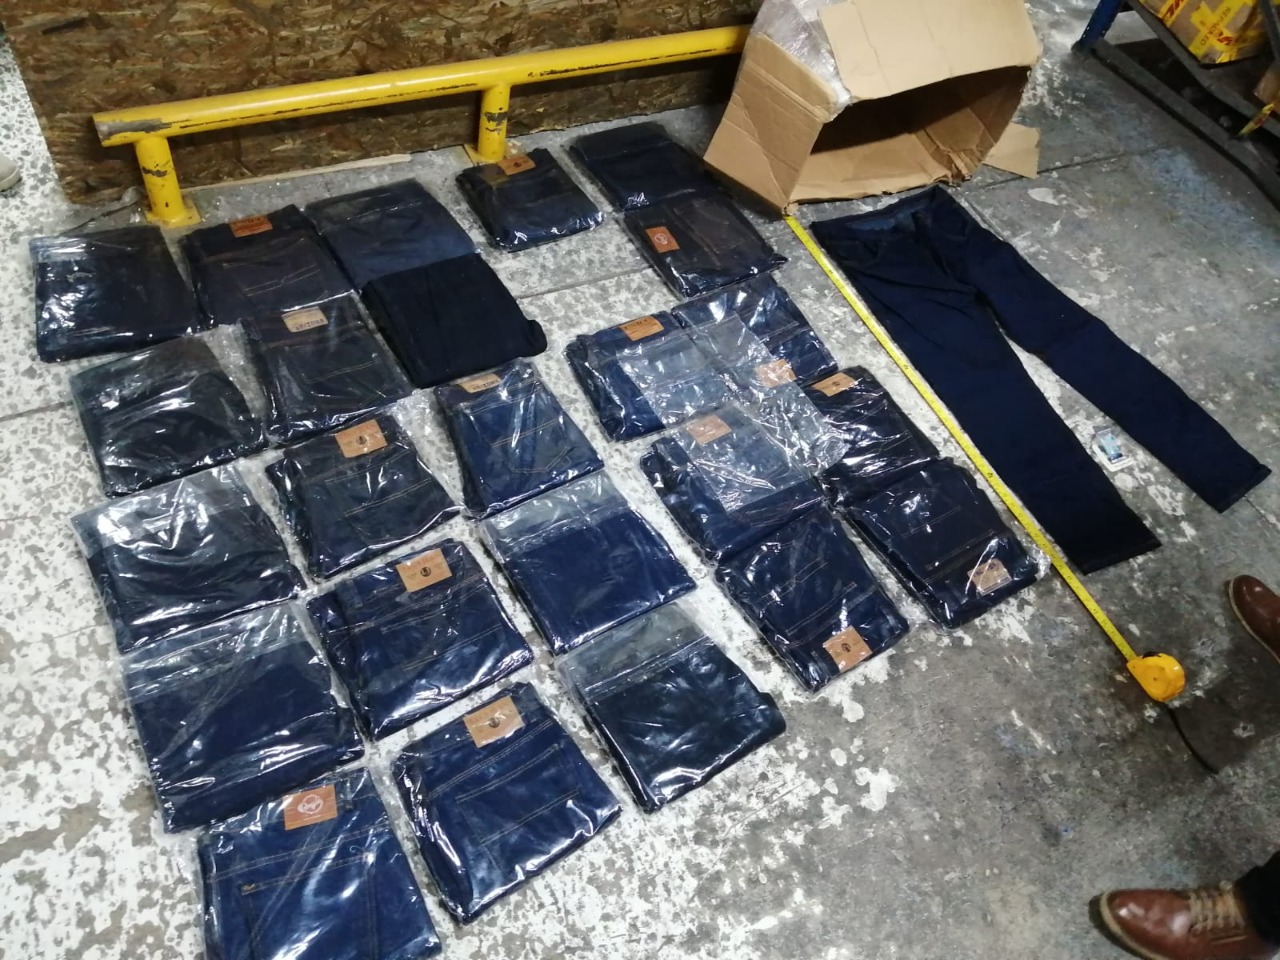 La PNC localizó pantalones con cocaína impregnada durante un operativo en la zona 13 capitalina. (Foto Prensa Libre: PNC)